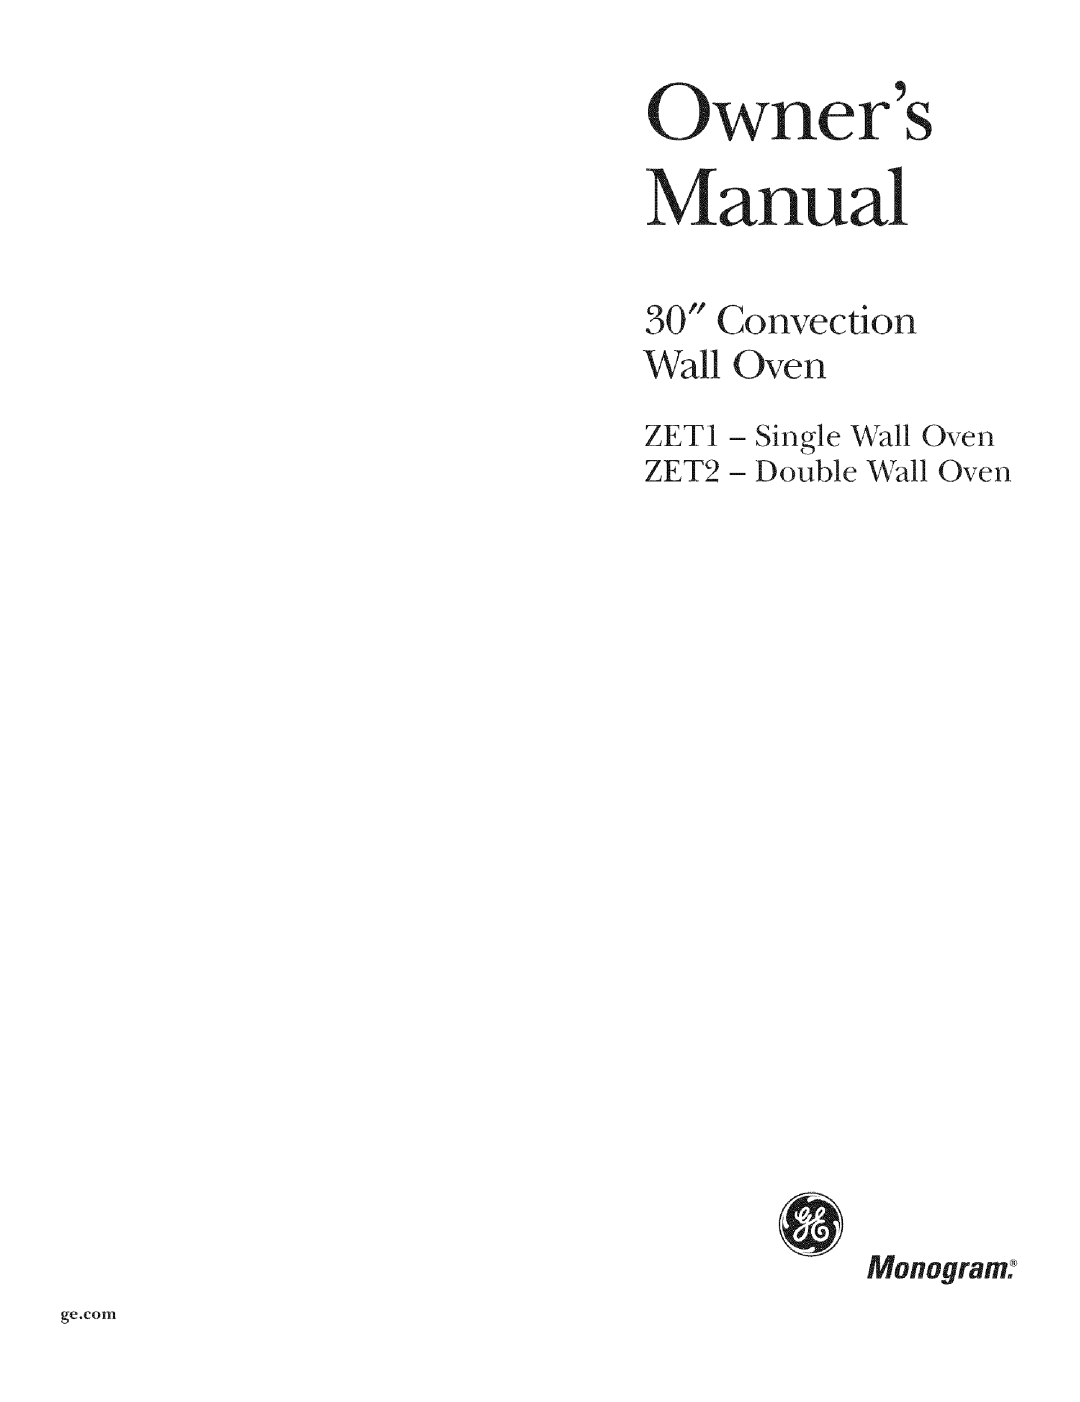 GE Monogram manual OWHeFS, ZET1 - Single Wall Oven ZET2 - Double Wall Oven, Monogram, Manual, Convection Wall Oven 